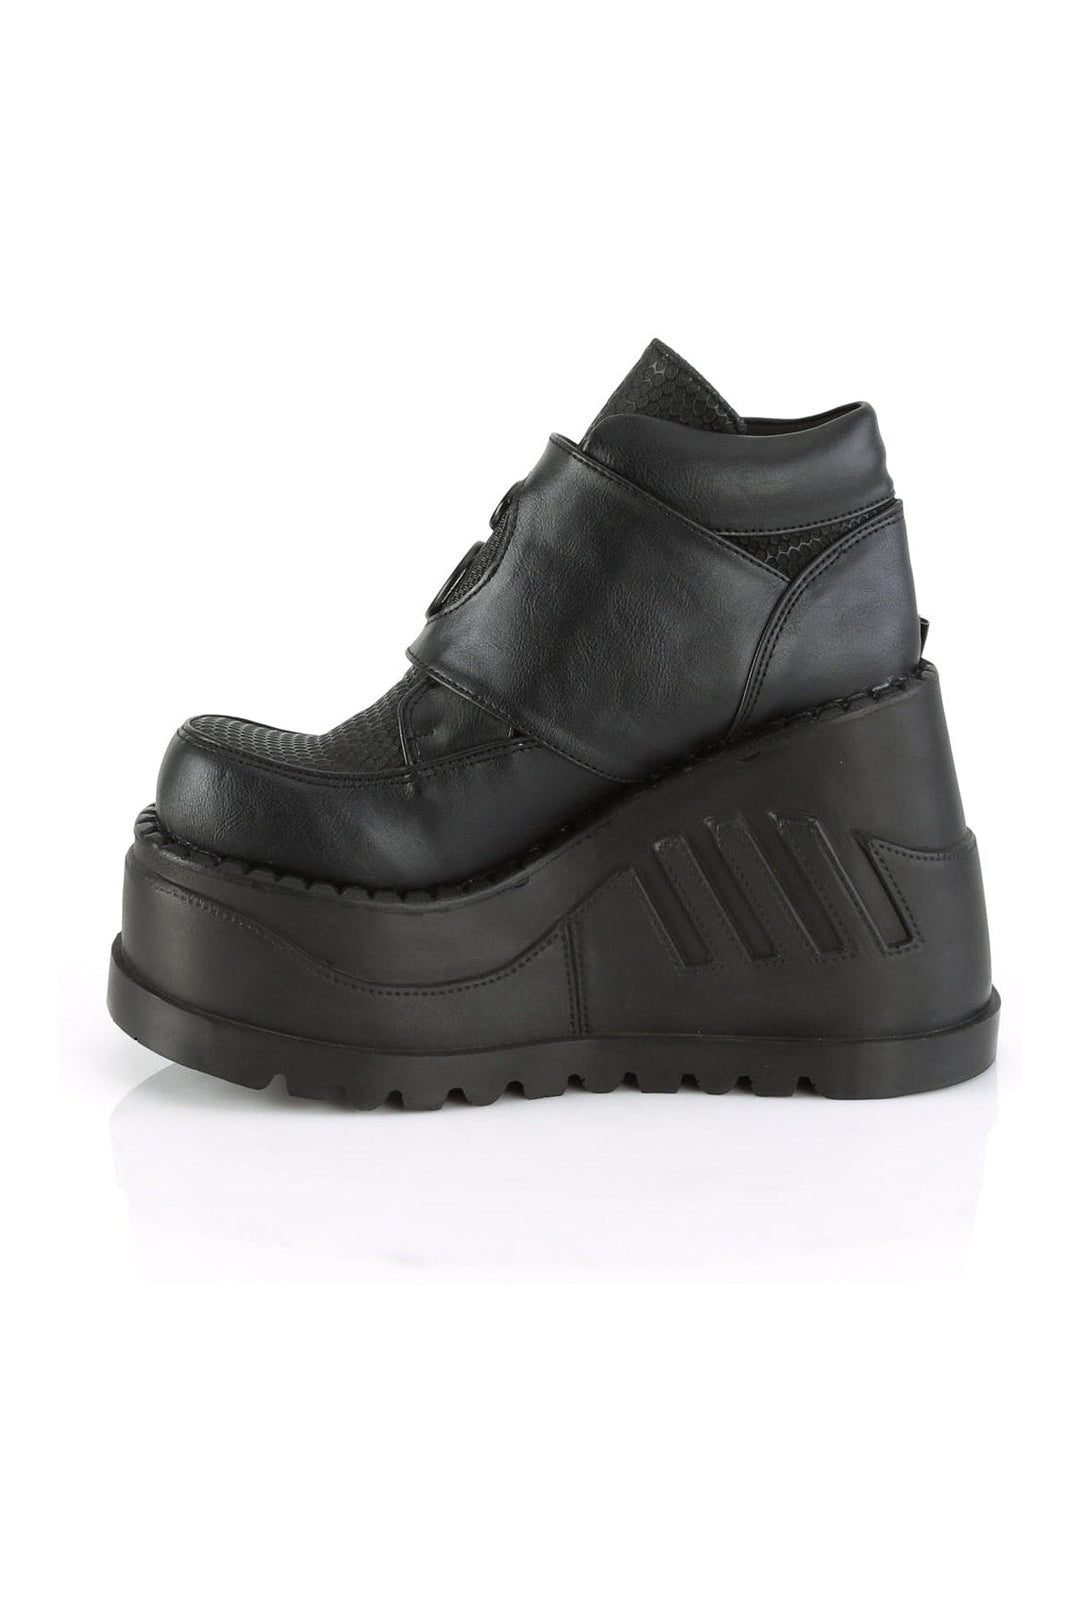 STOMP-15 Black Vegan Leather Cyber Shoe